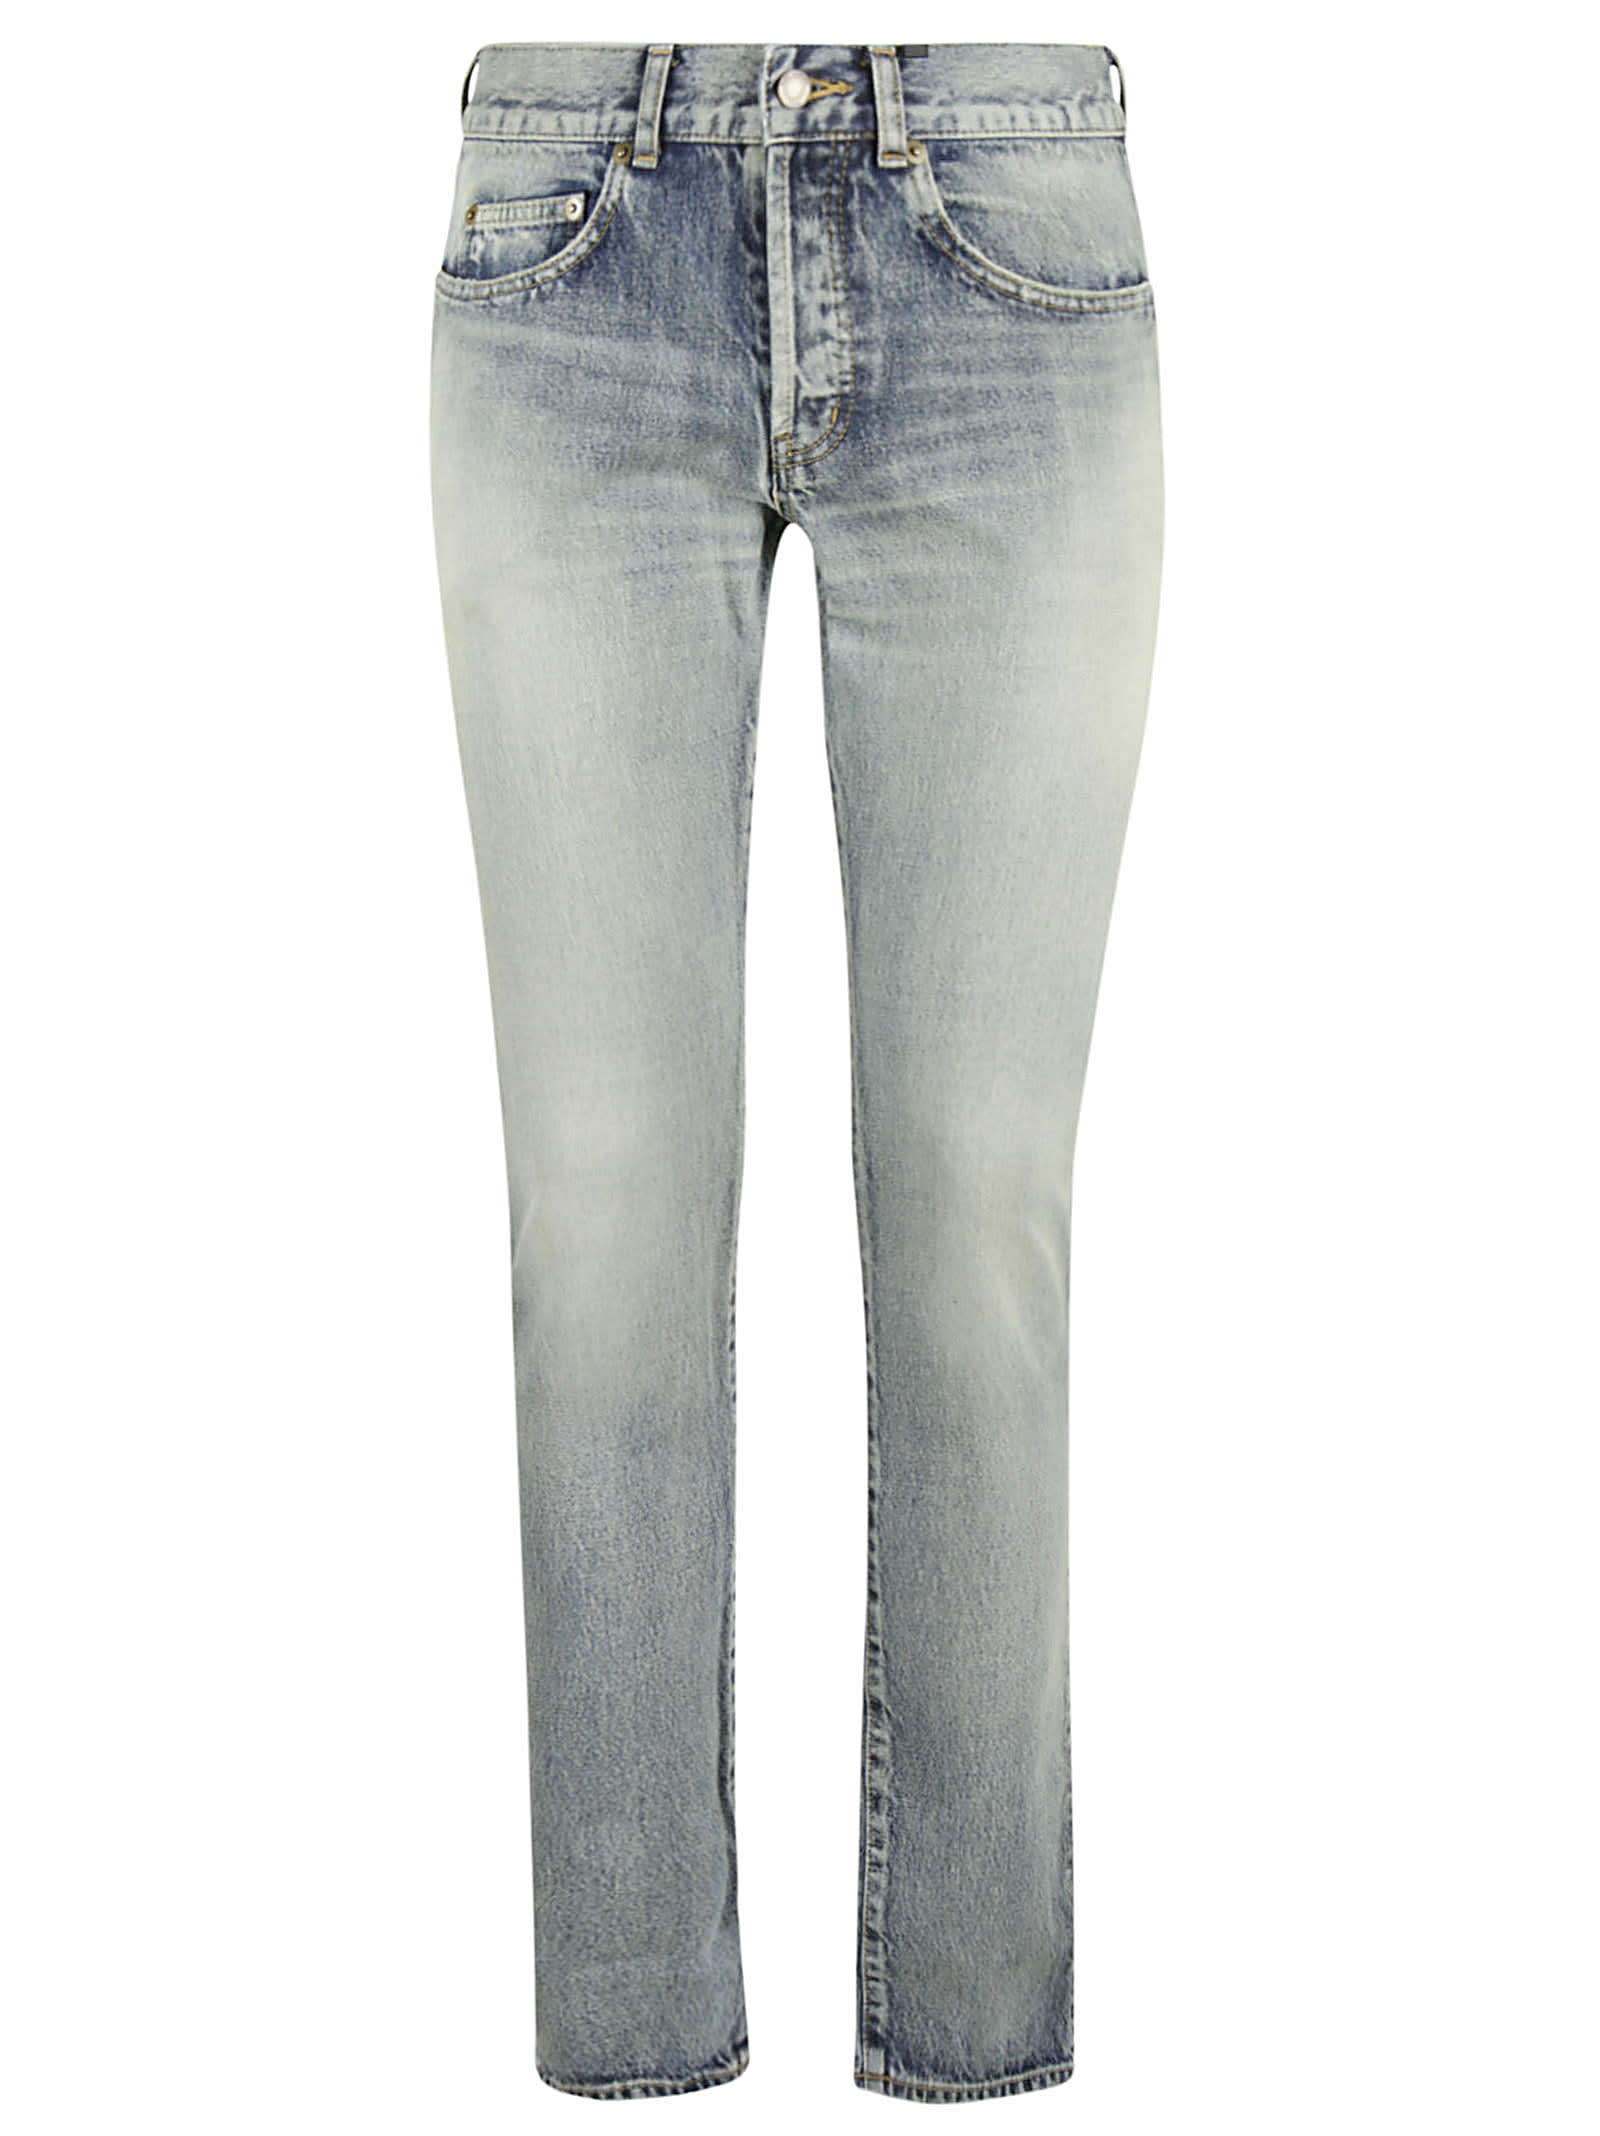 Saint Laurent Skinny Slim Fit Jeans